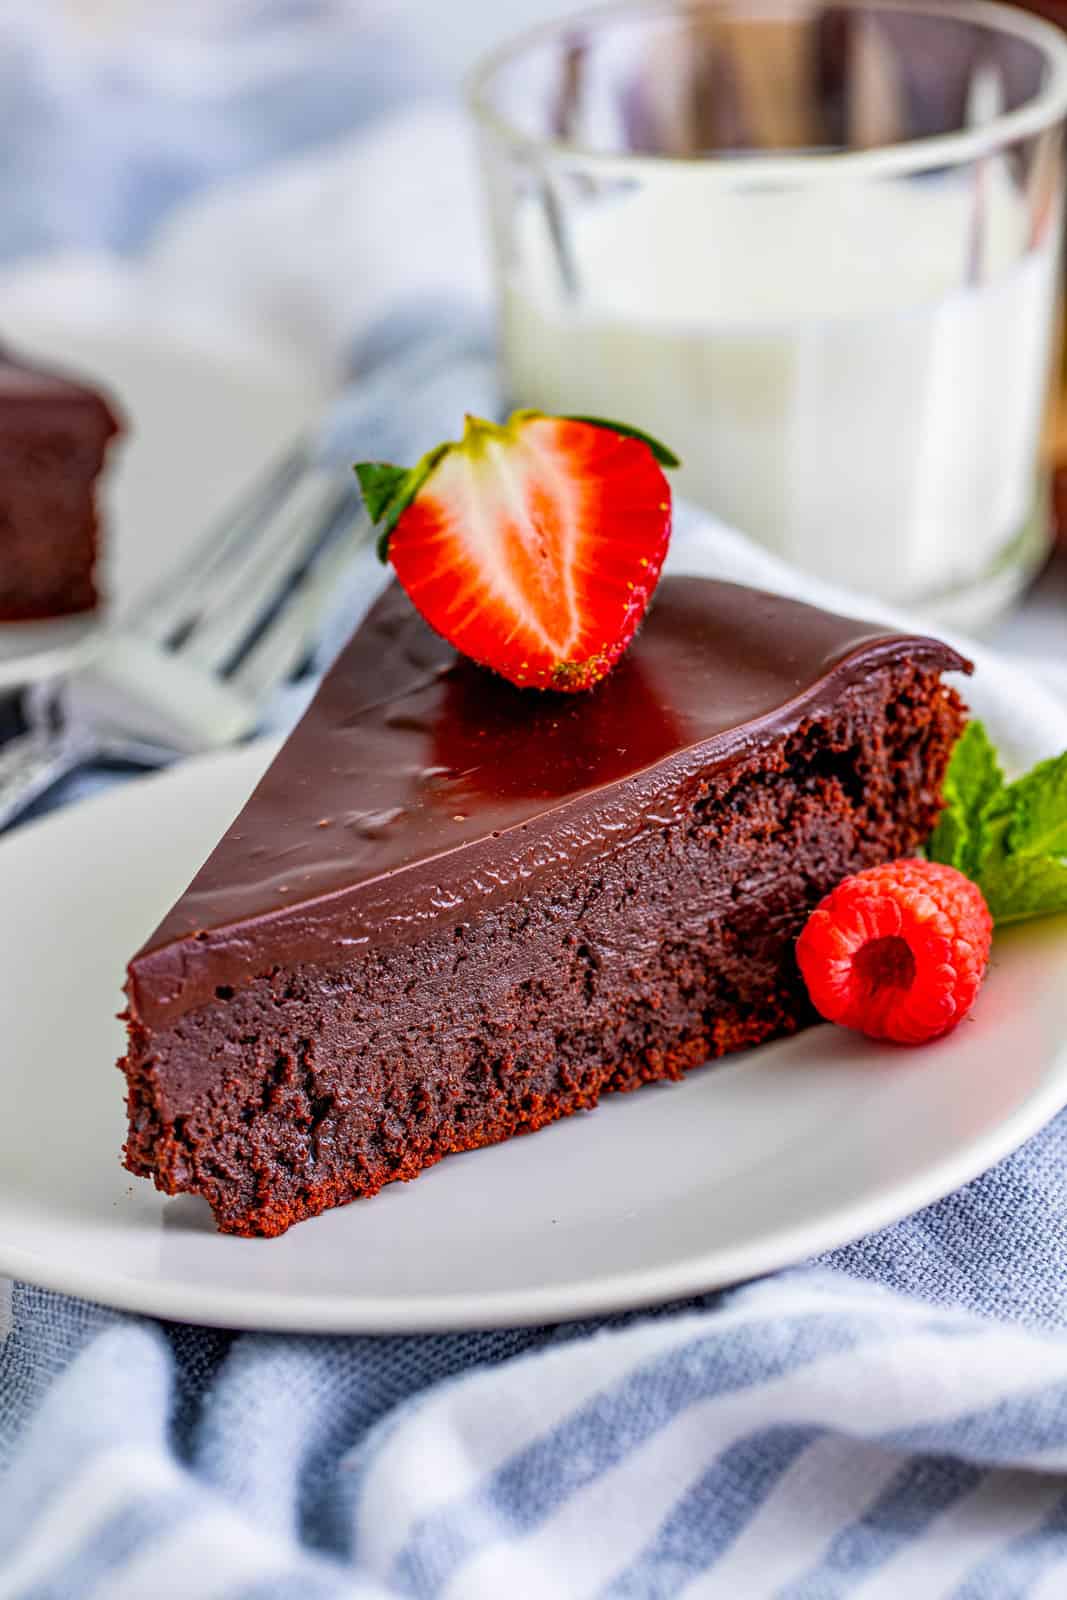 Slice of Flourless Chocolate Cake on white plate with strawberry garnish.